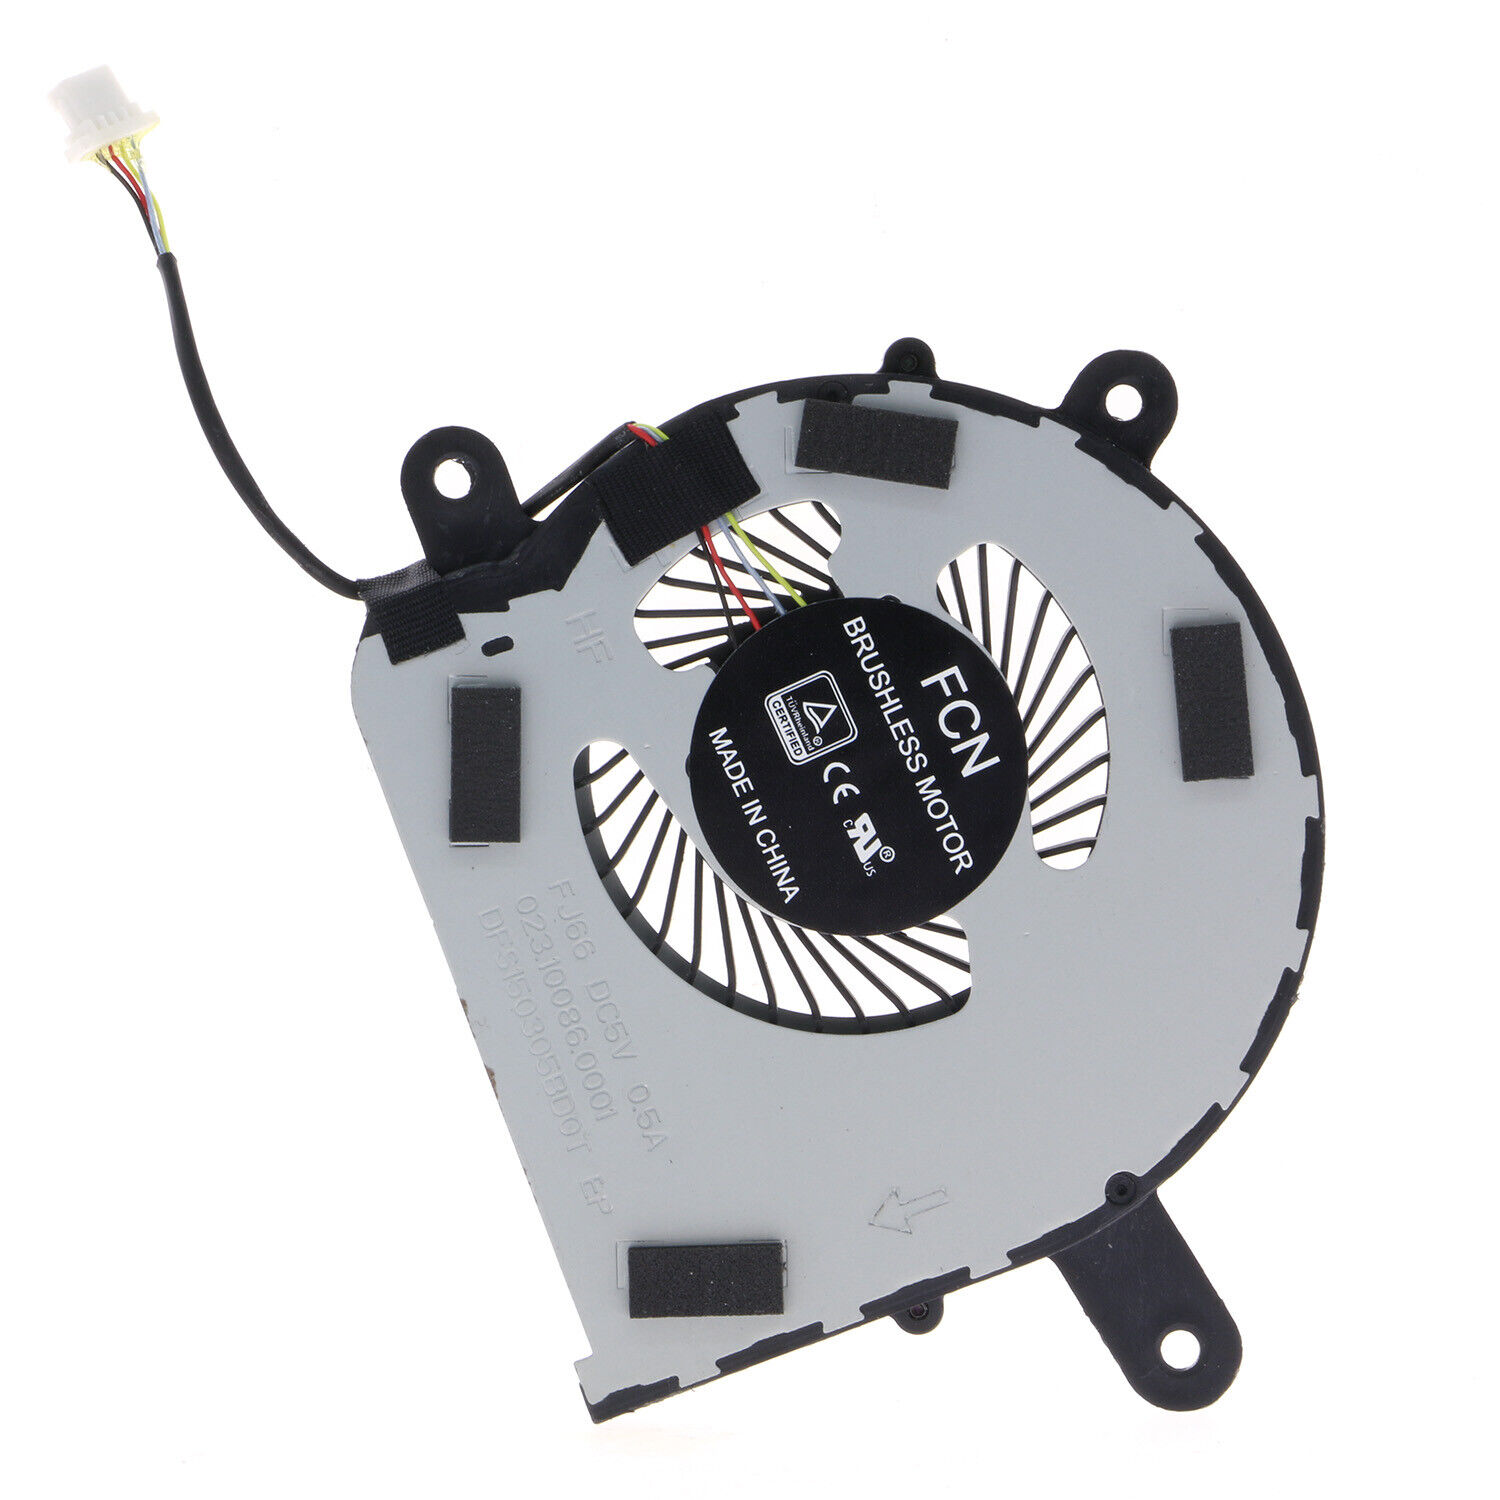 NEW SATA HDD Cooling Fan For HP Elitedesk 800 G3 65W models